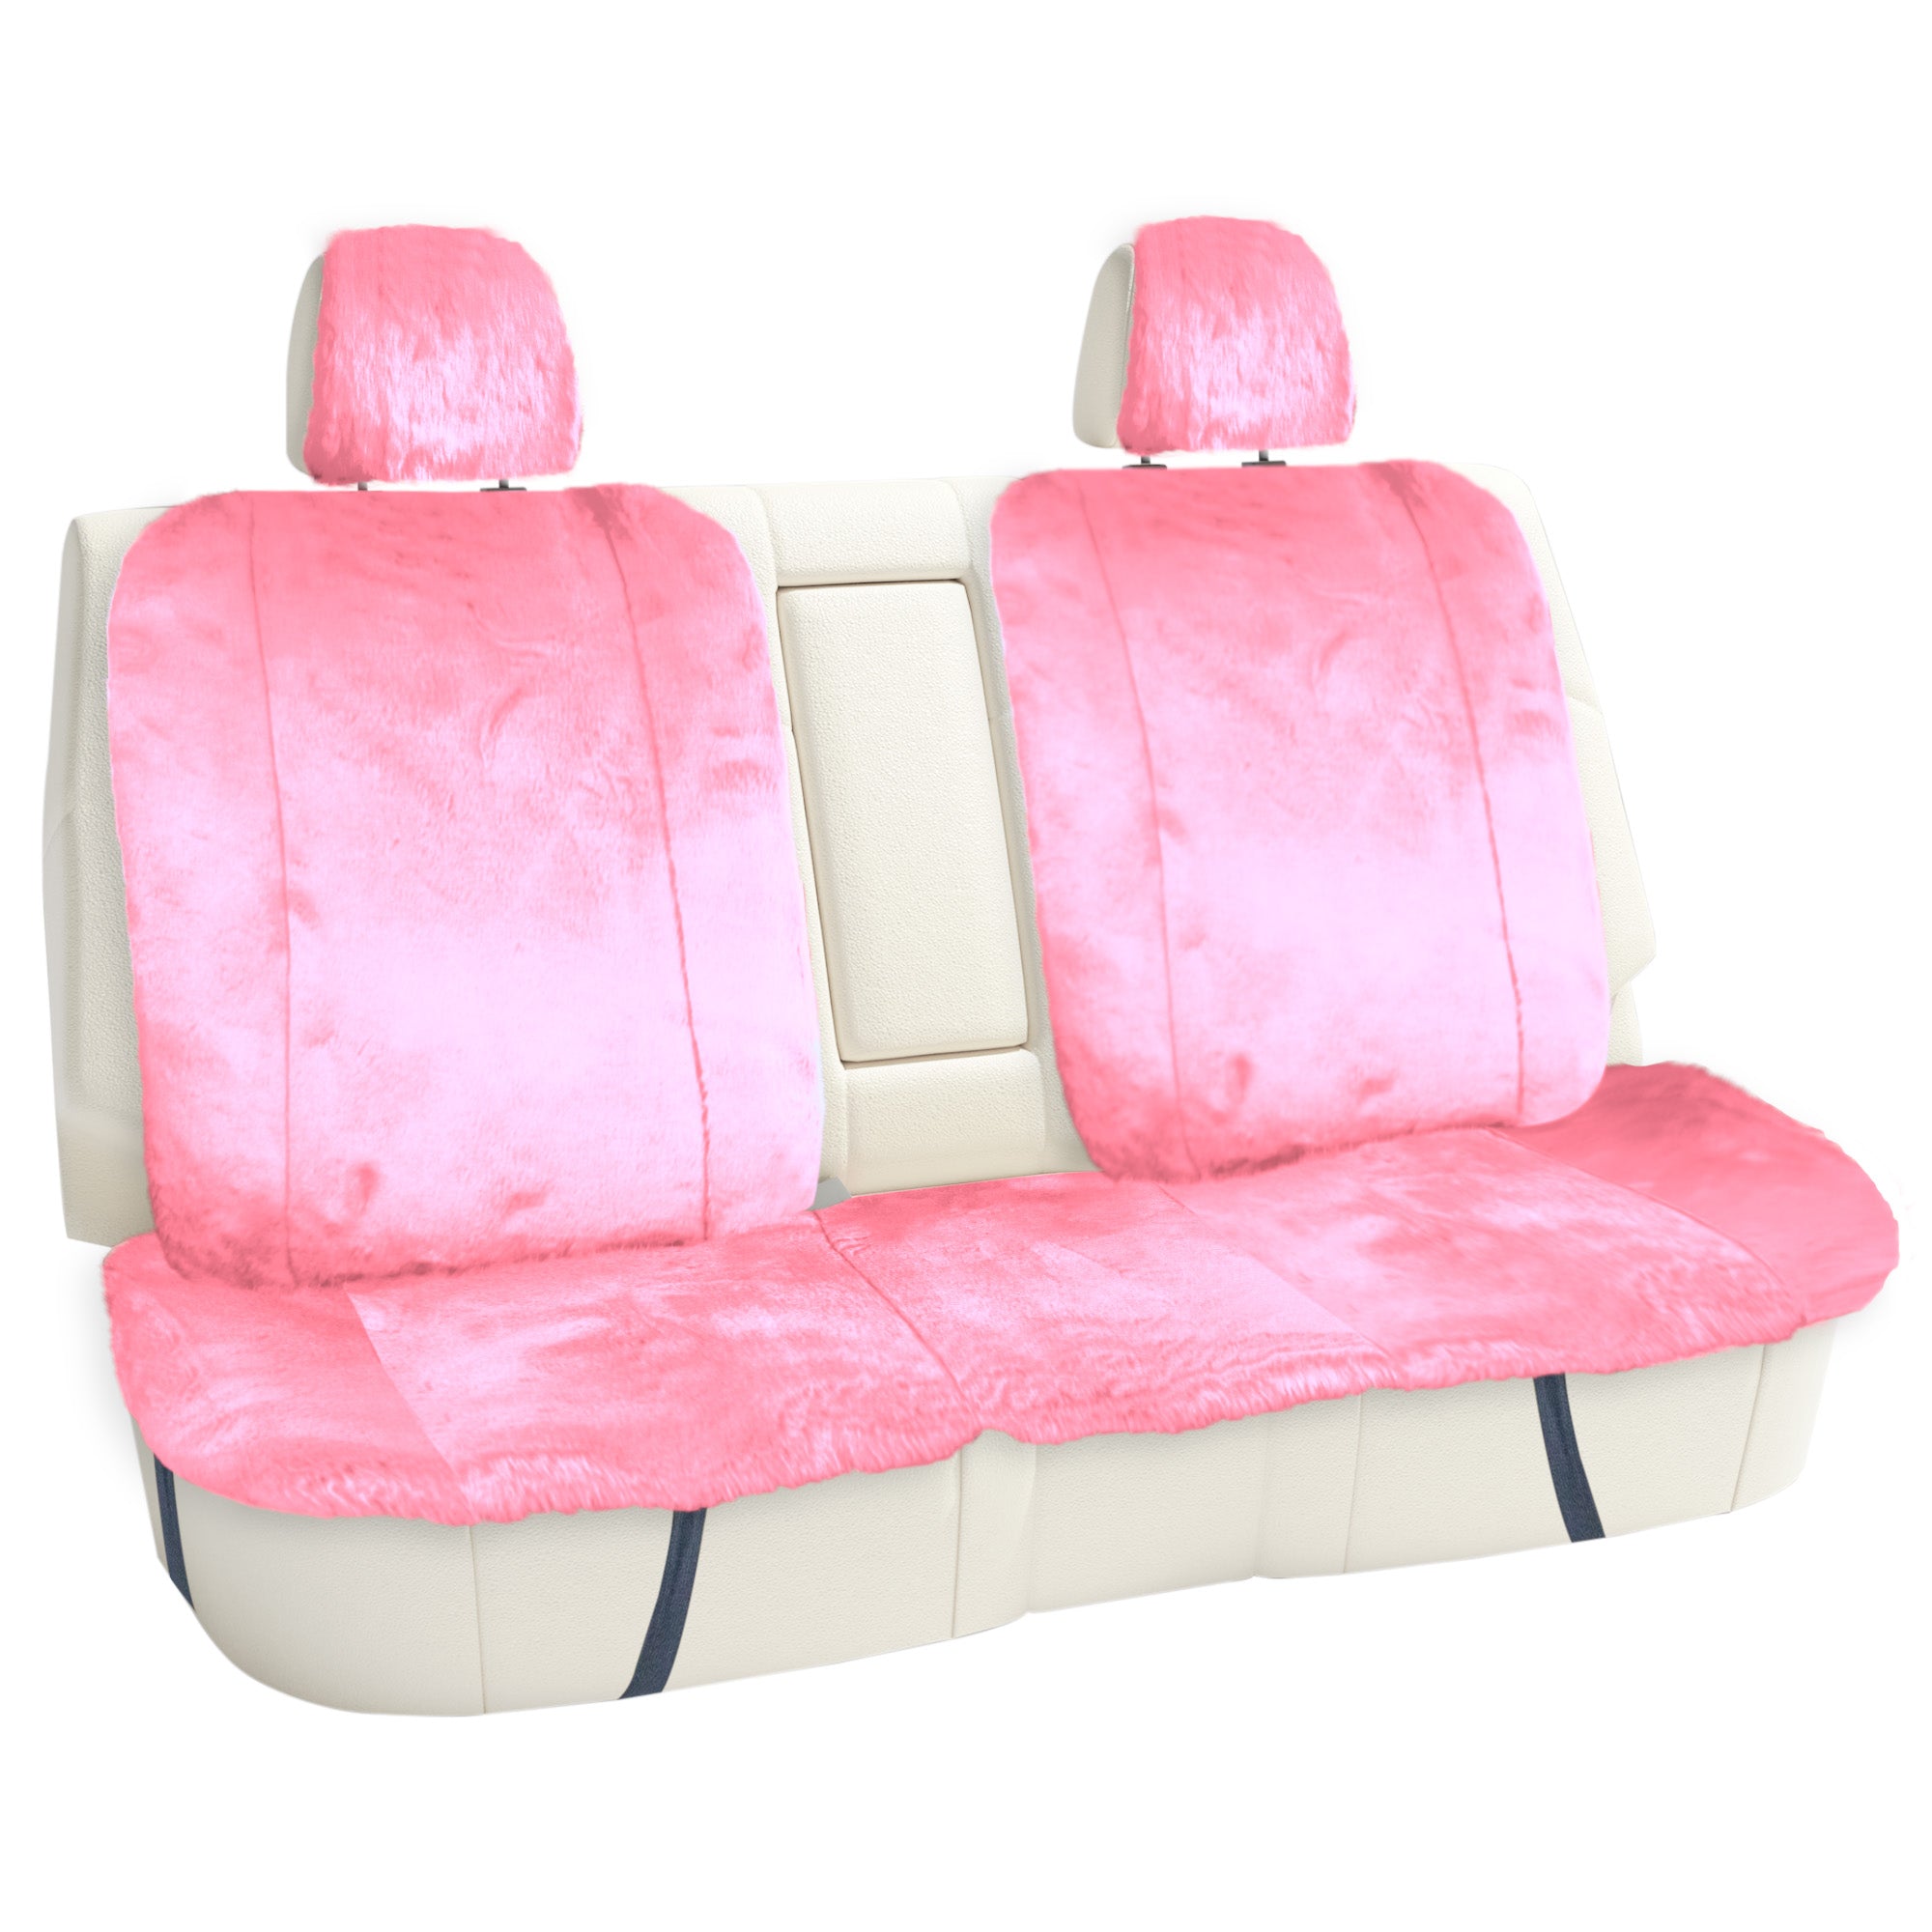 Doe16 Faux Rabbit Fur Car Seat Cushions - Rear Set Pink